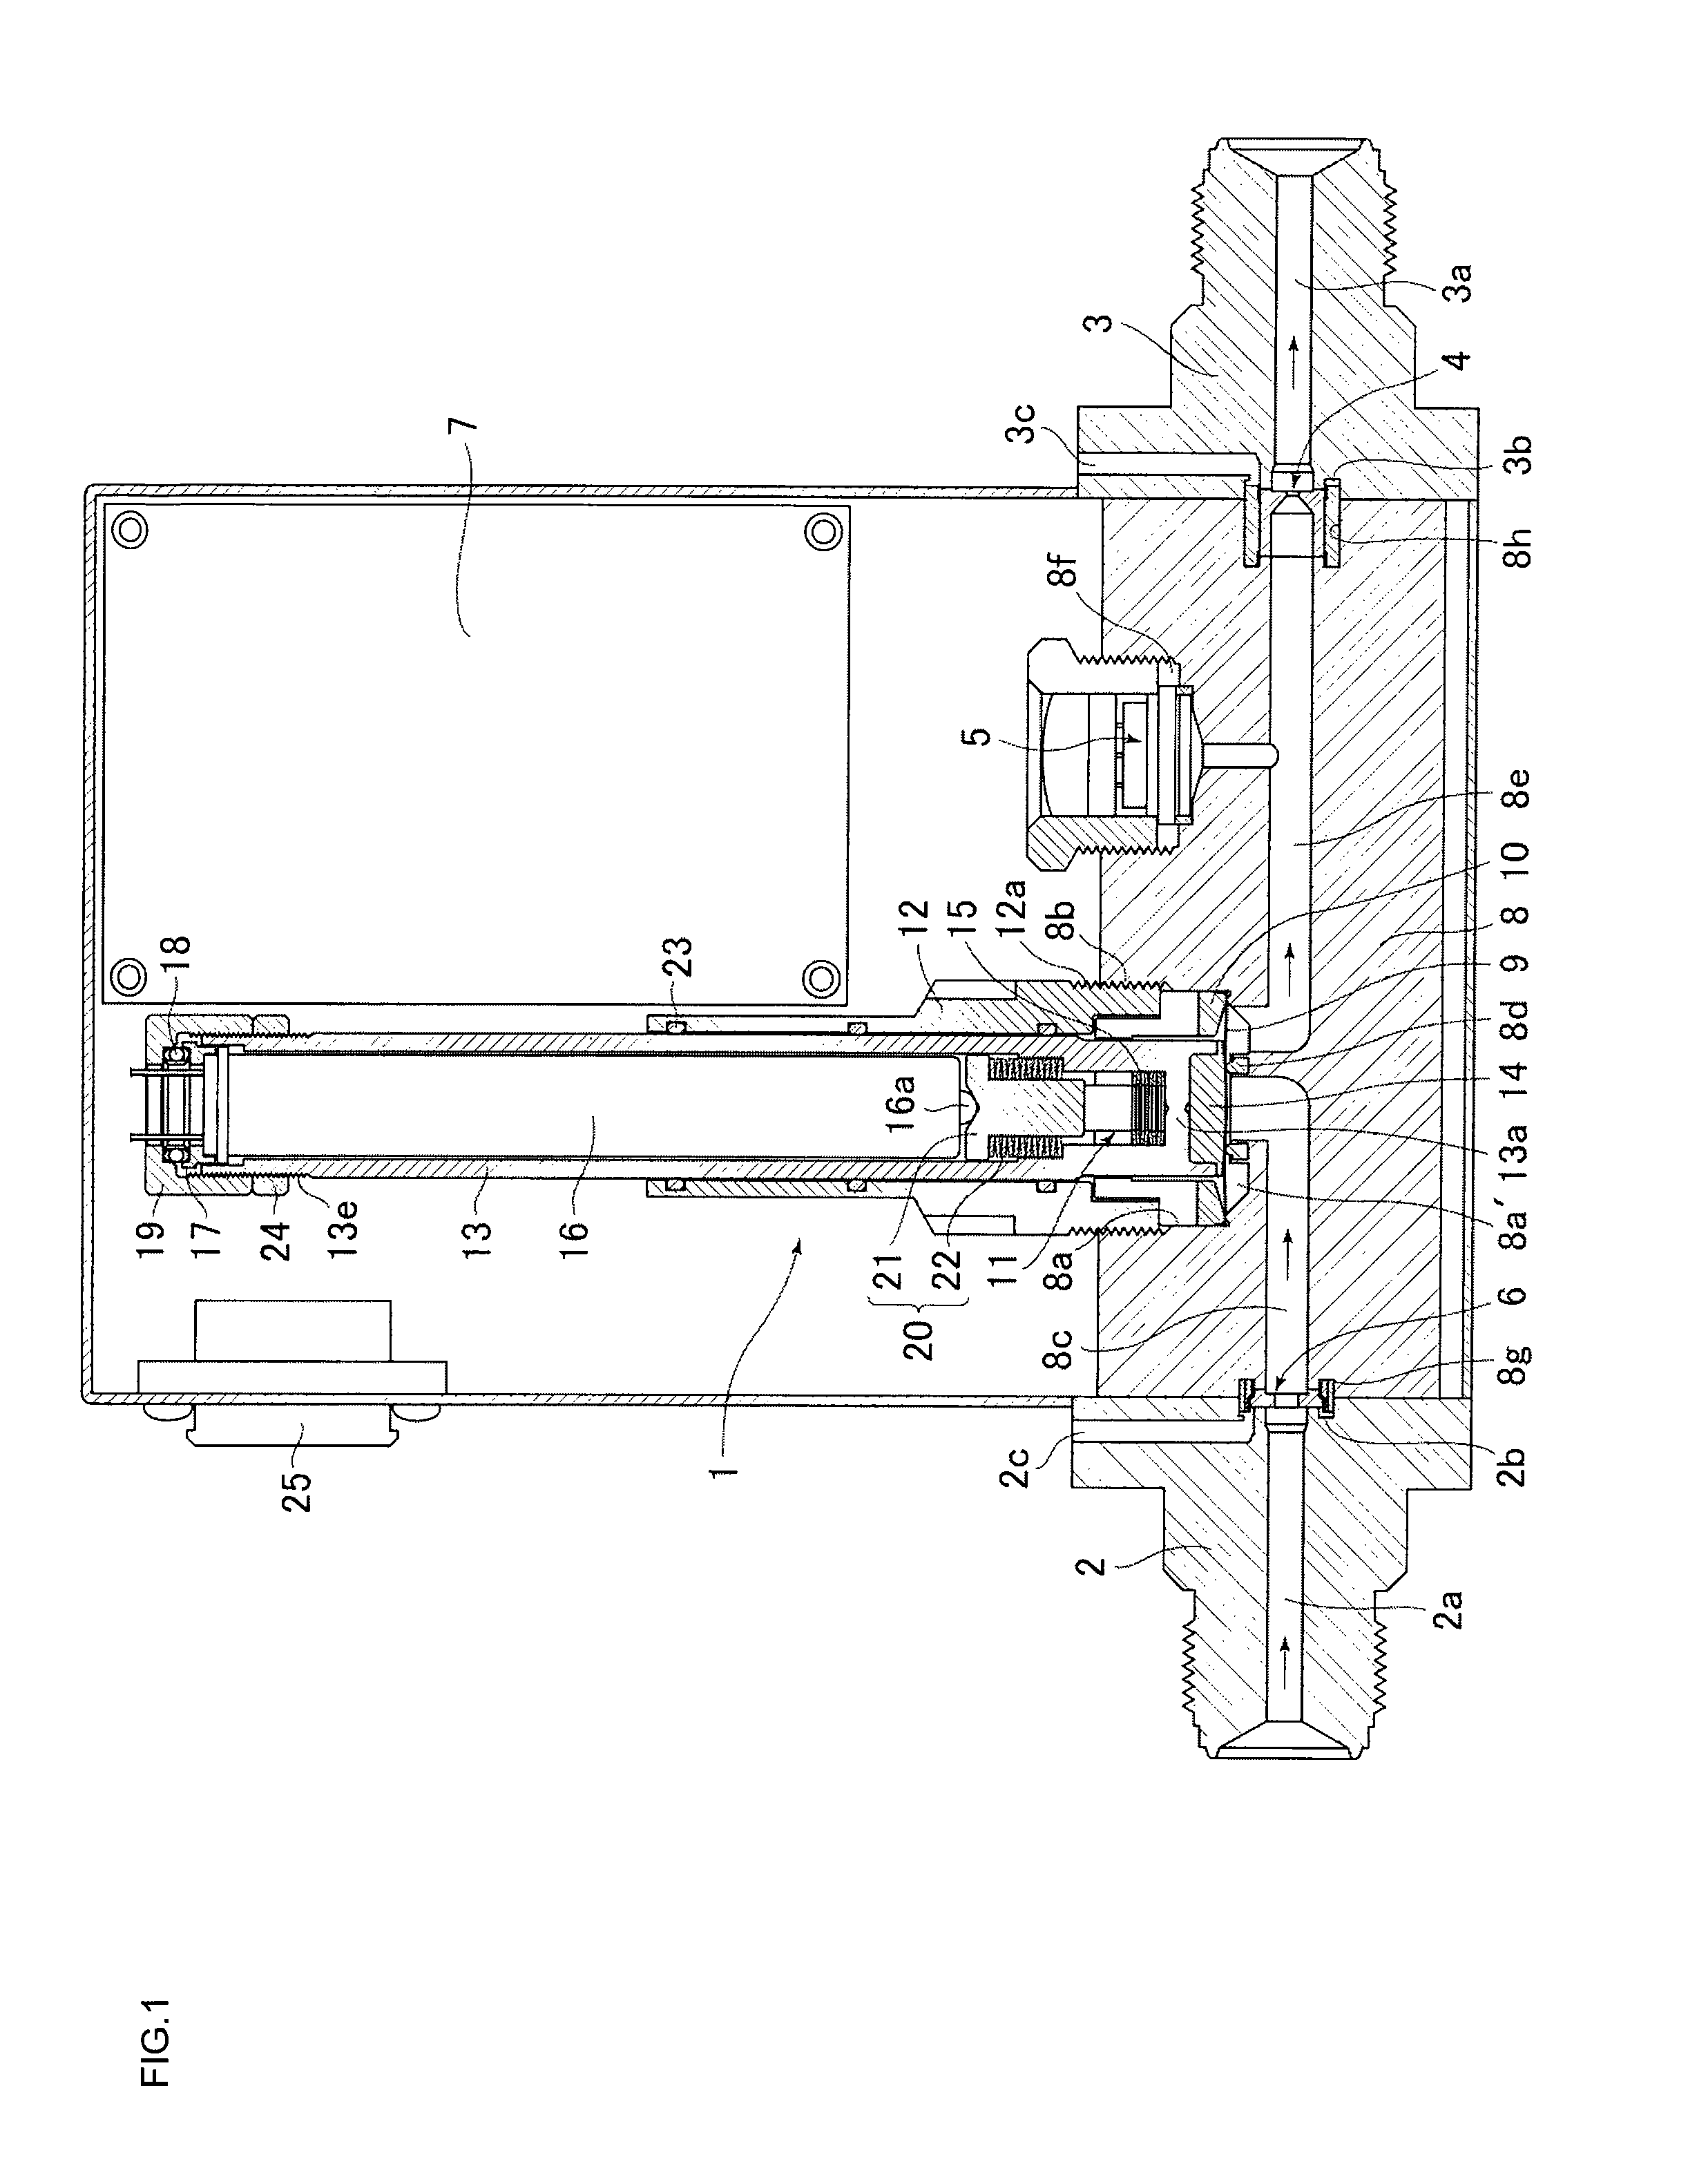 Piezoelectric driven control valve